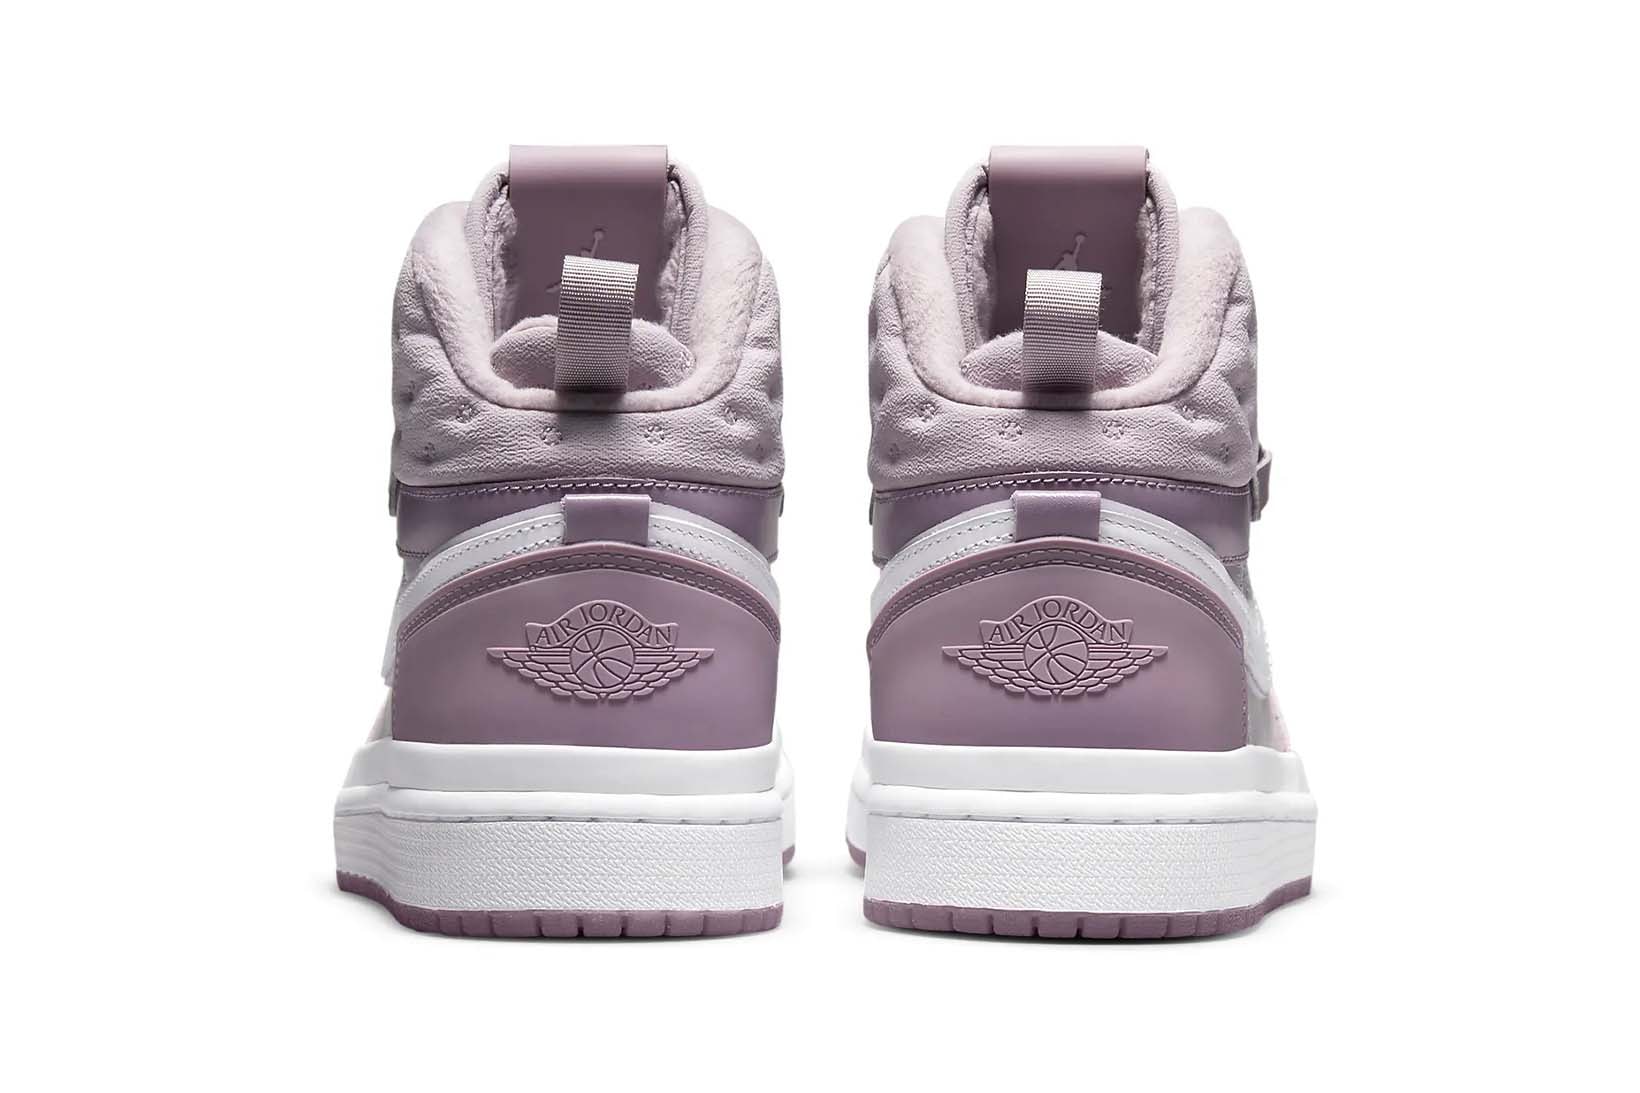 Sneaker Release Roundup Womens Reebok BBC Yeezy adidas Air Jordan Nike